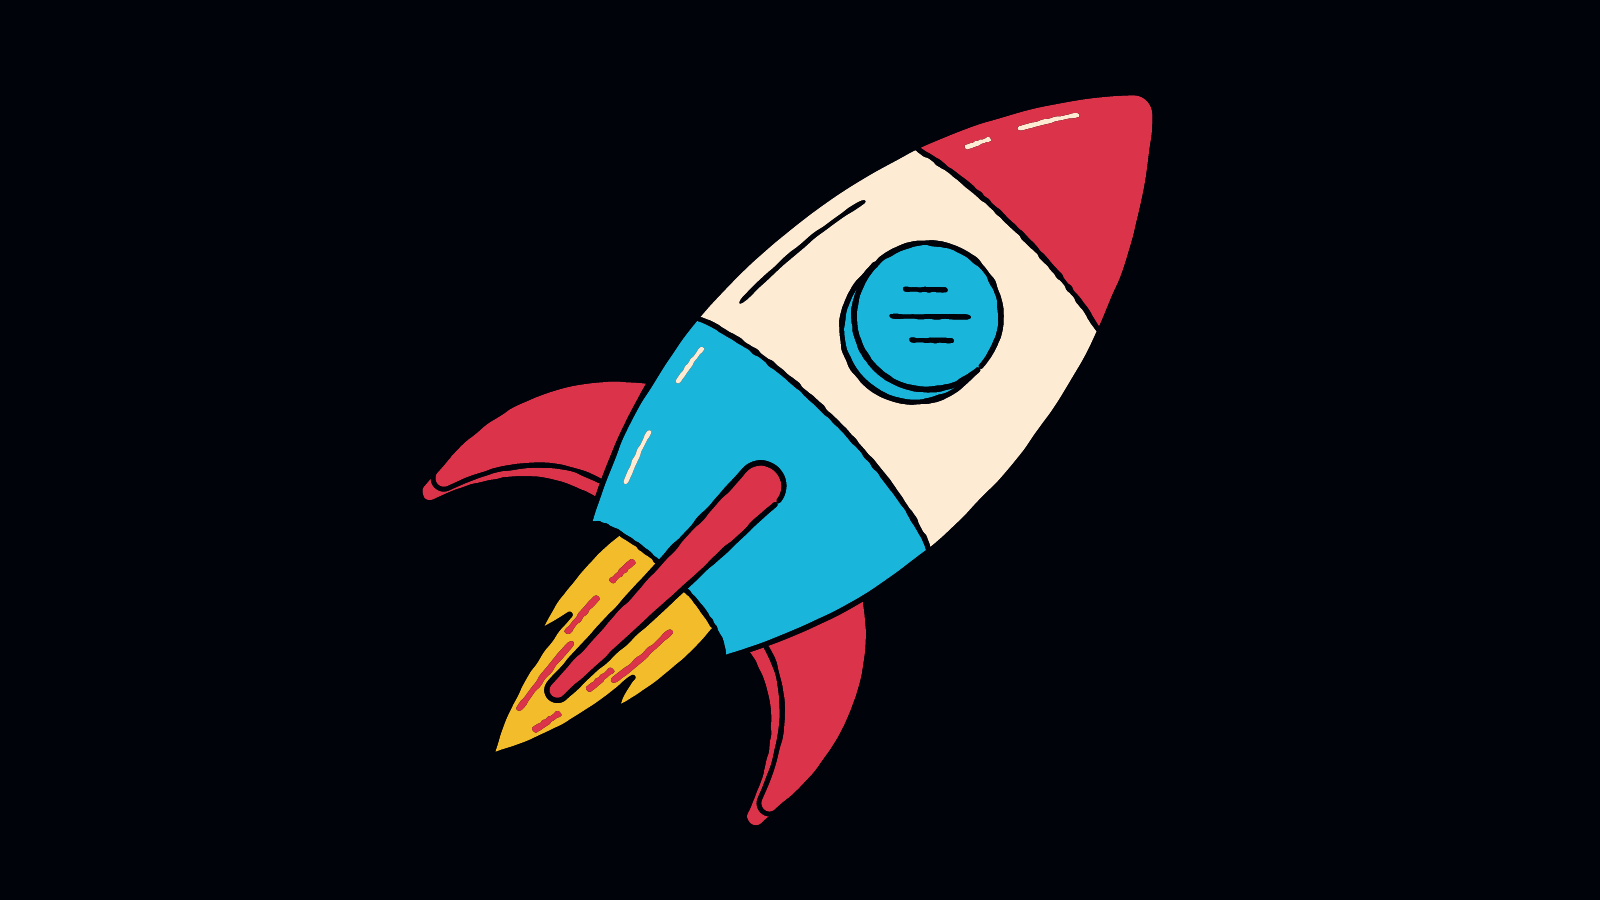 A cartoon-style rocket taking off 